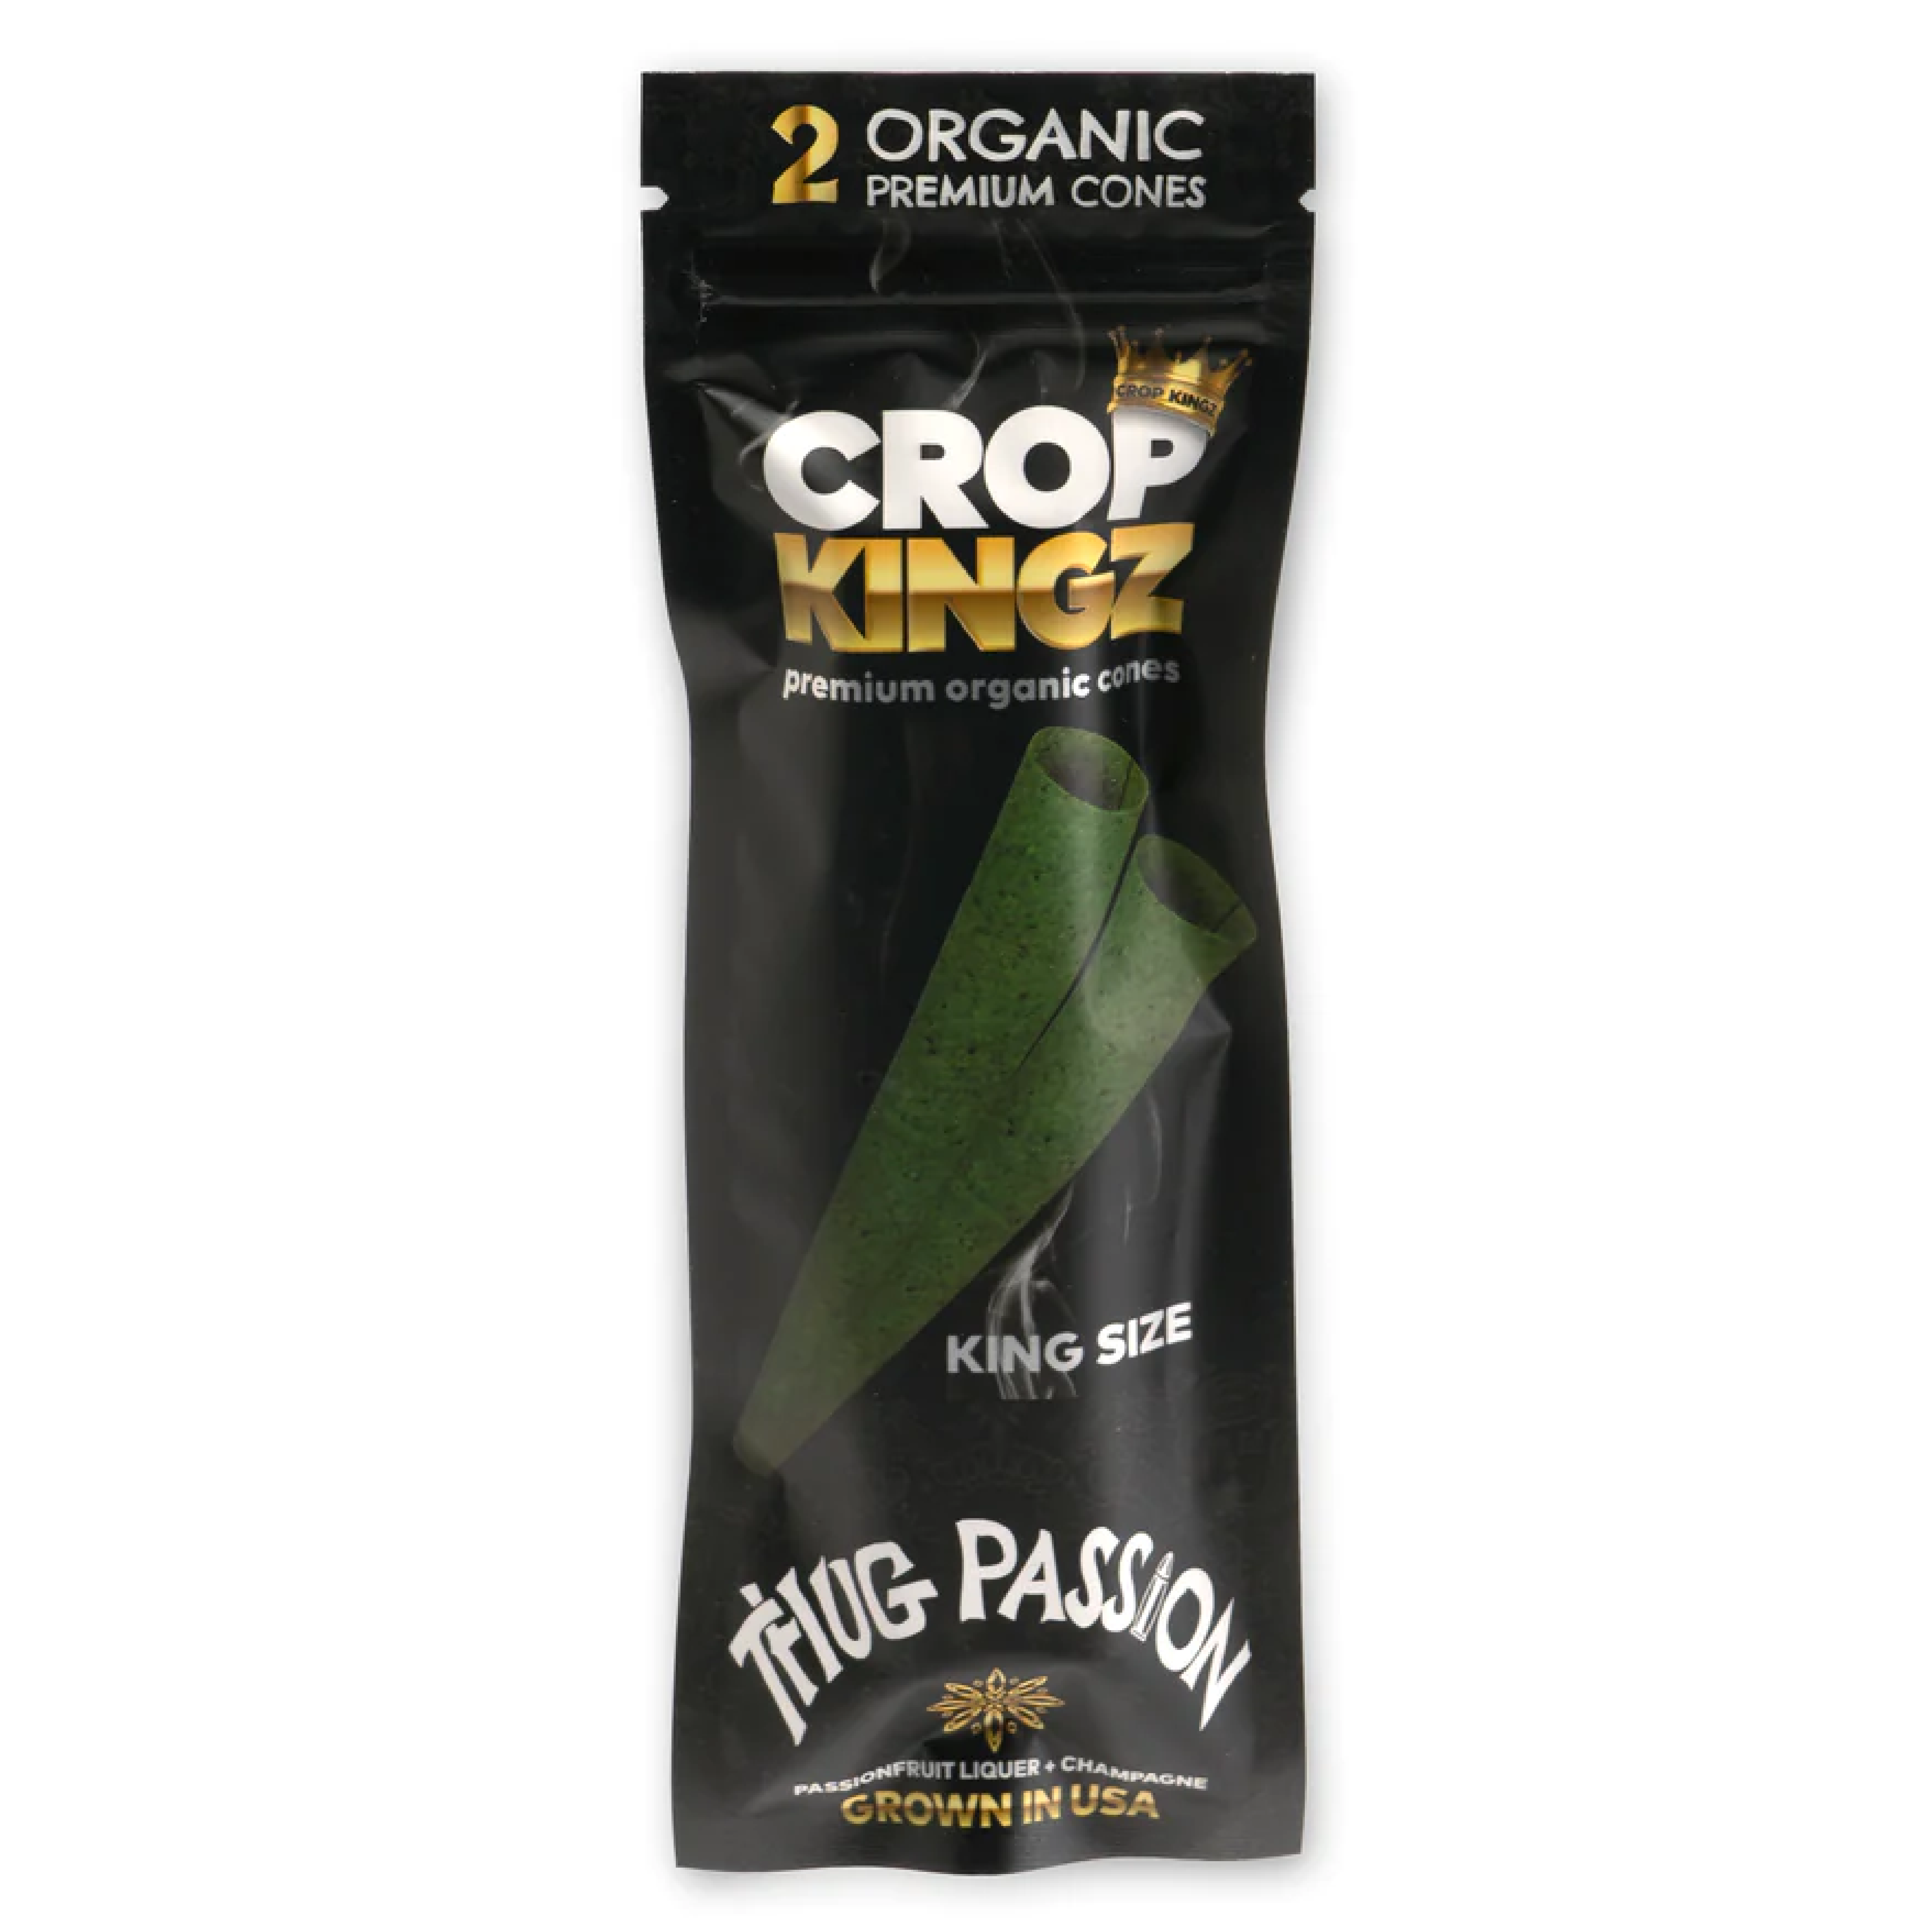 Crop Kingz True Passion Premium Organic King Size Cones 2pk